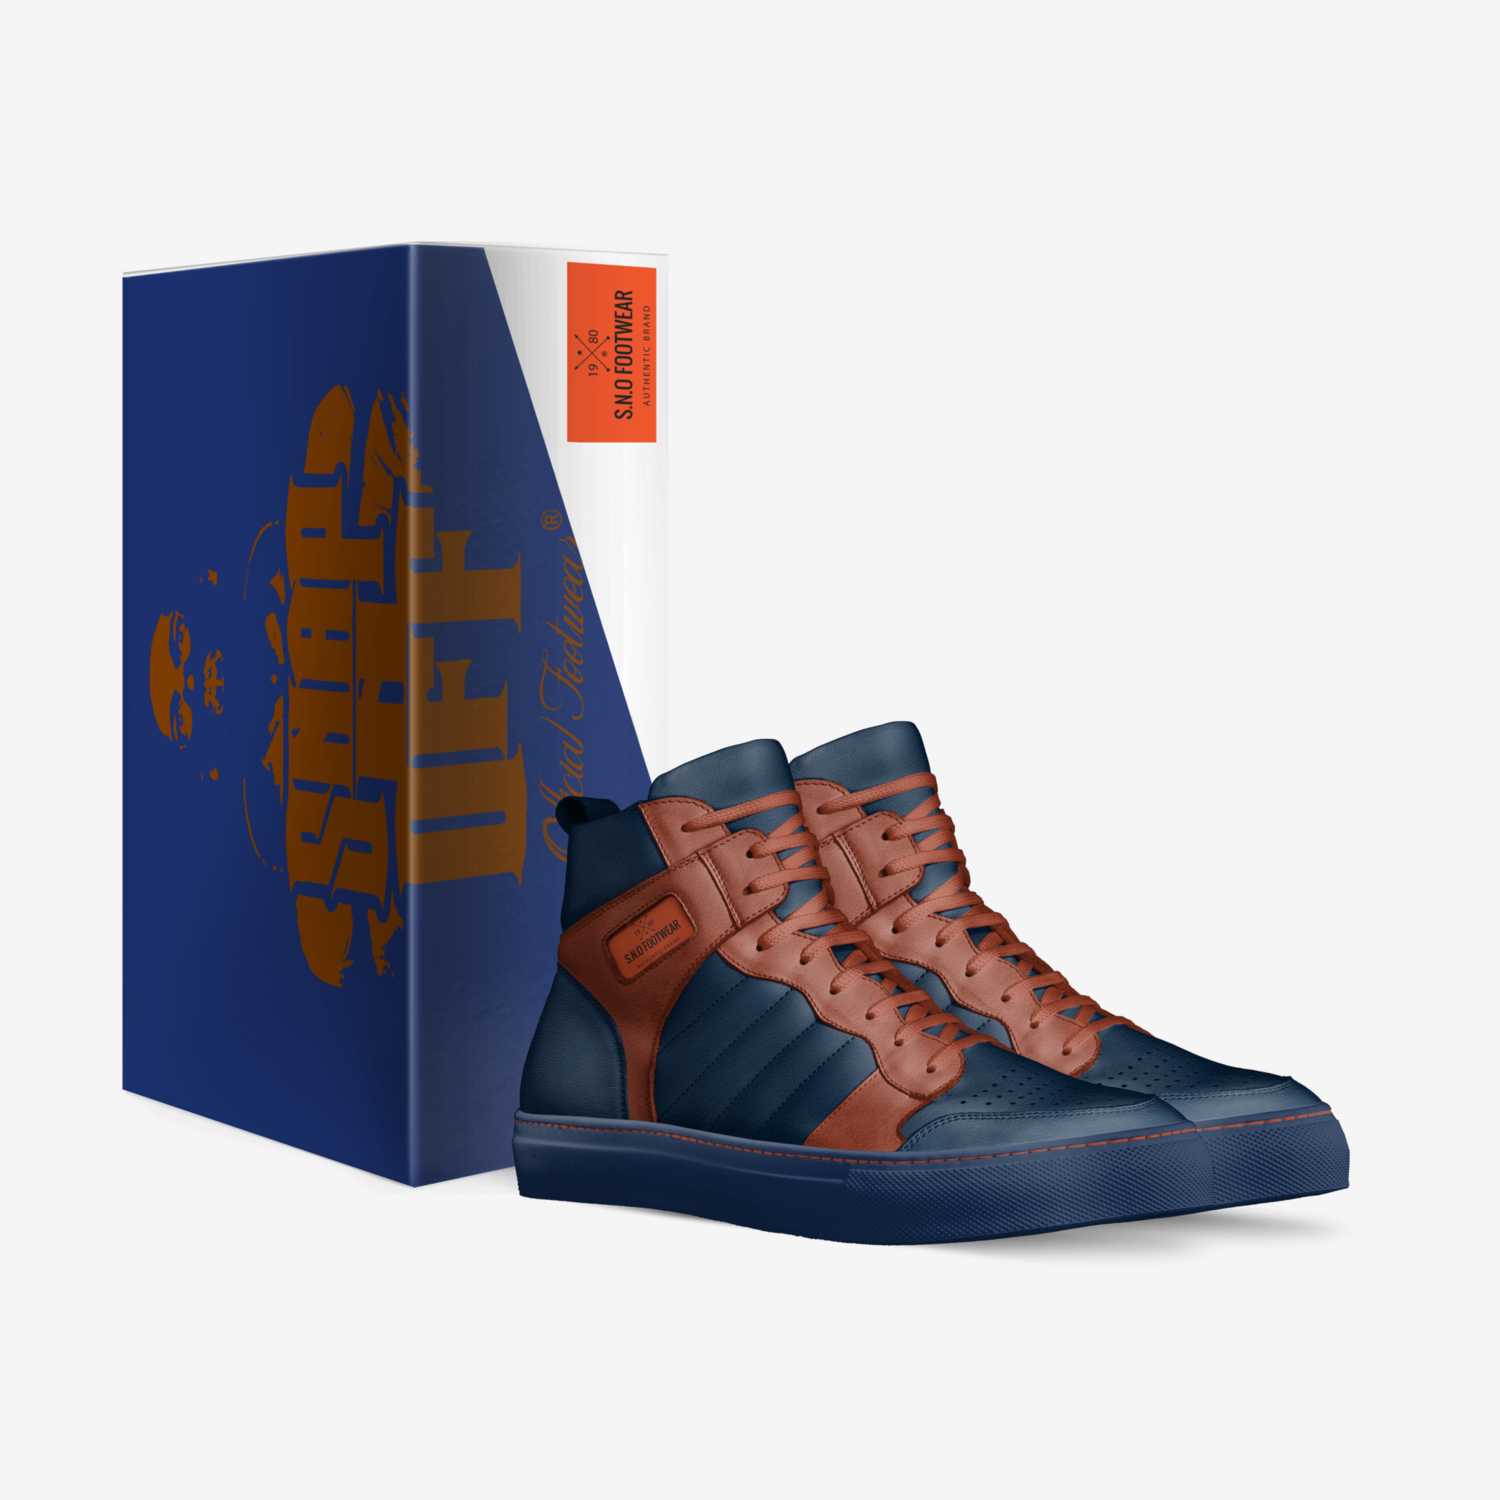 S.N.O FOOTWEAR custom made in Italy shoes by Zeanetta Bradley | Box view